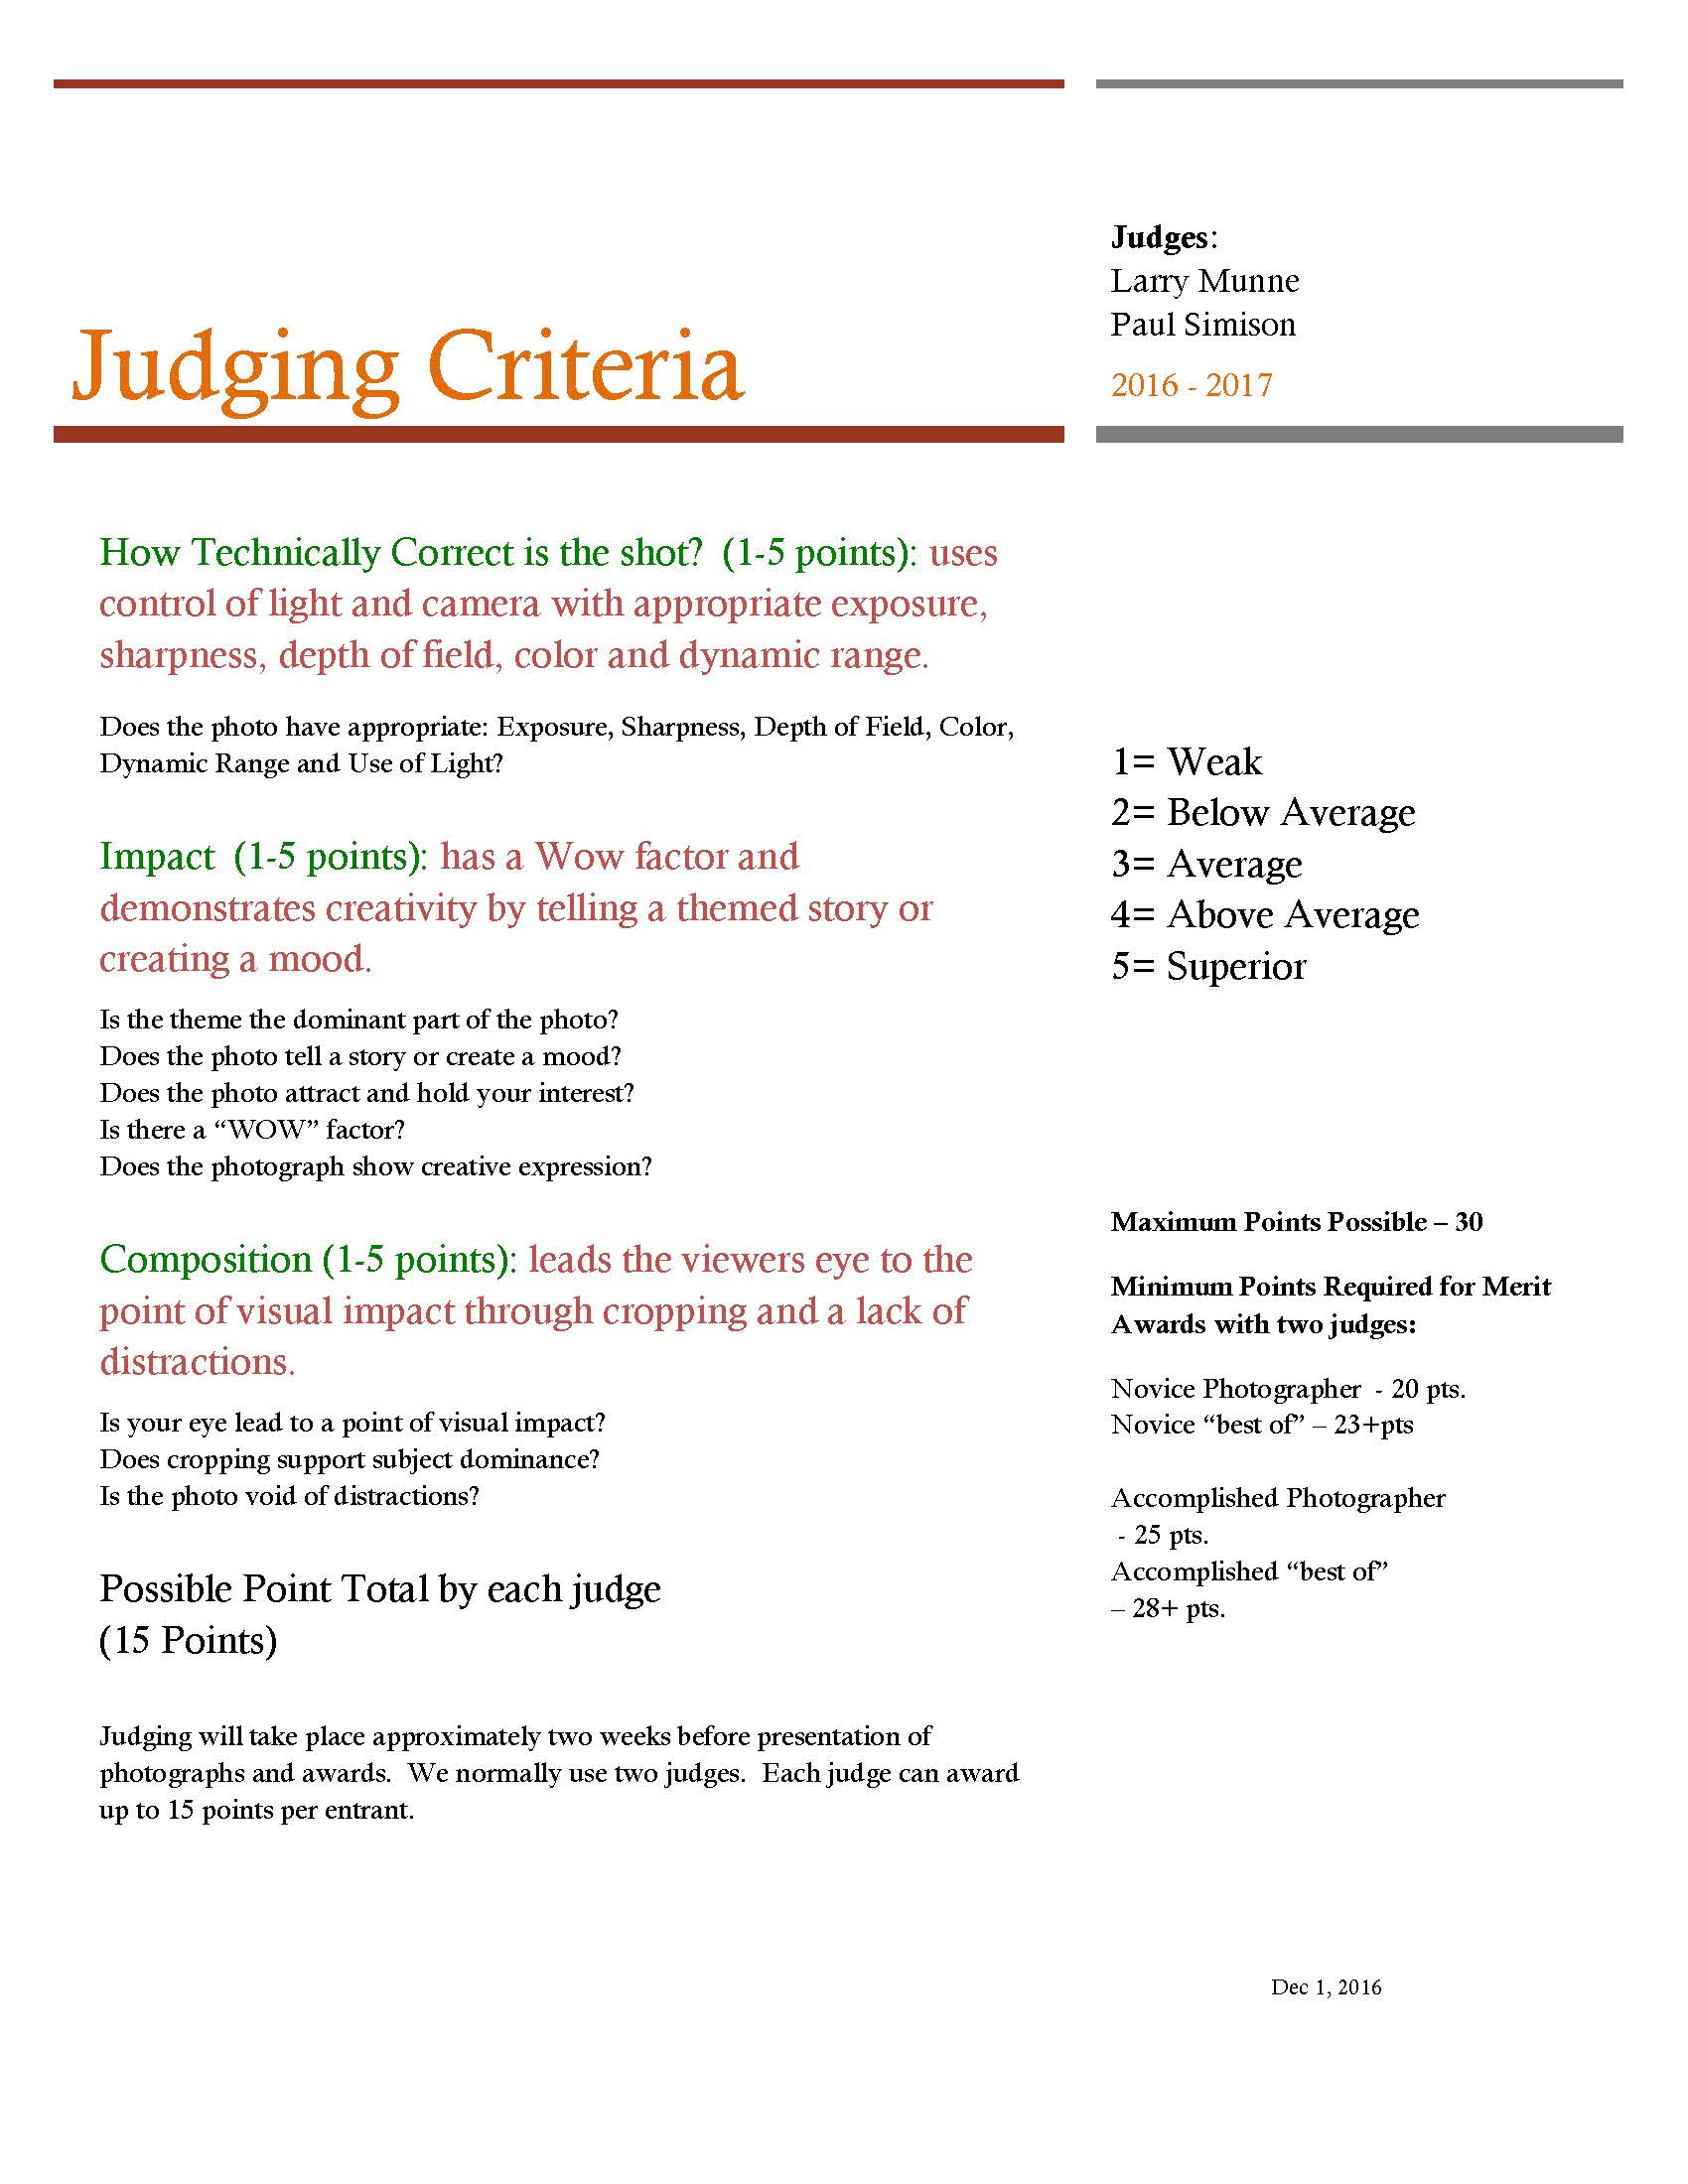 judging criteria for presentation